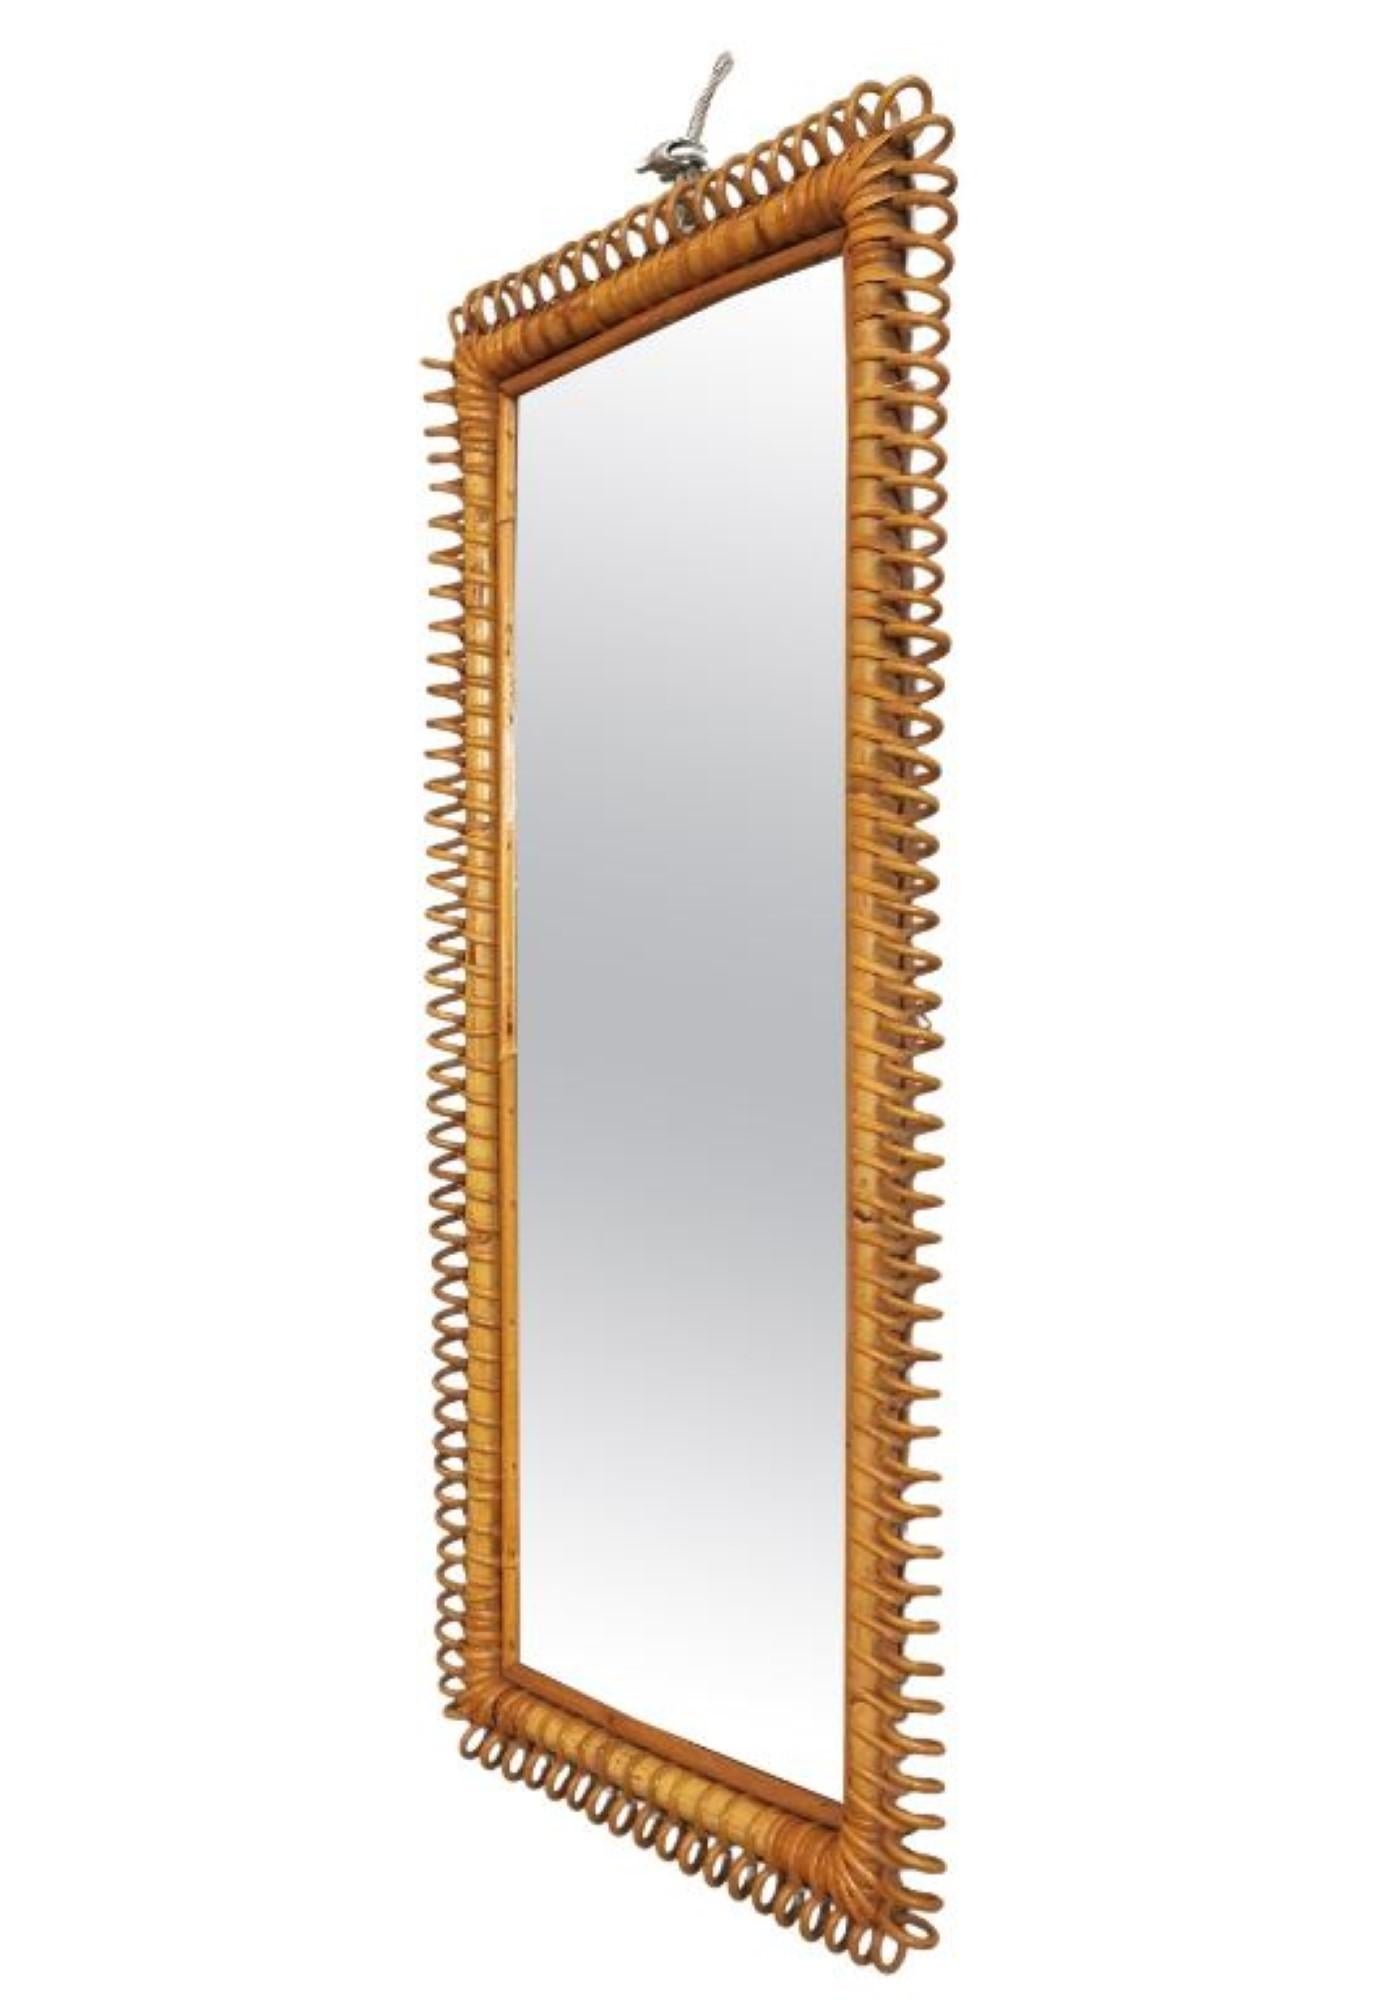 Lacquered Rare Midcentury Italian Rattan Bamboo Wall Mirror Franco Albini, Italian, 1960s